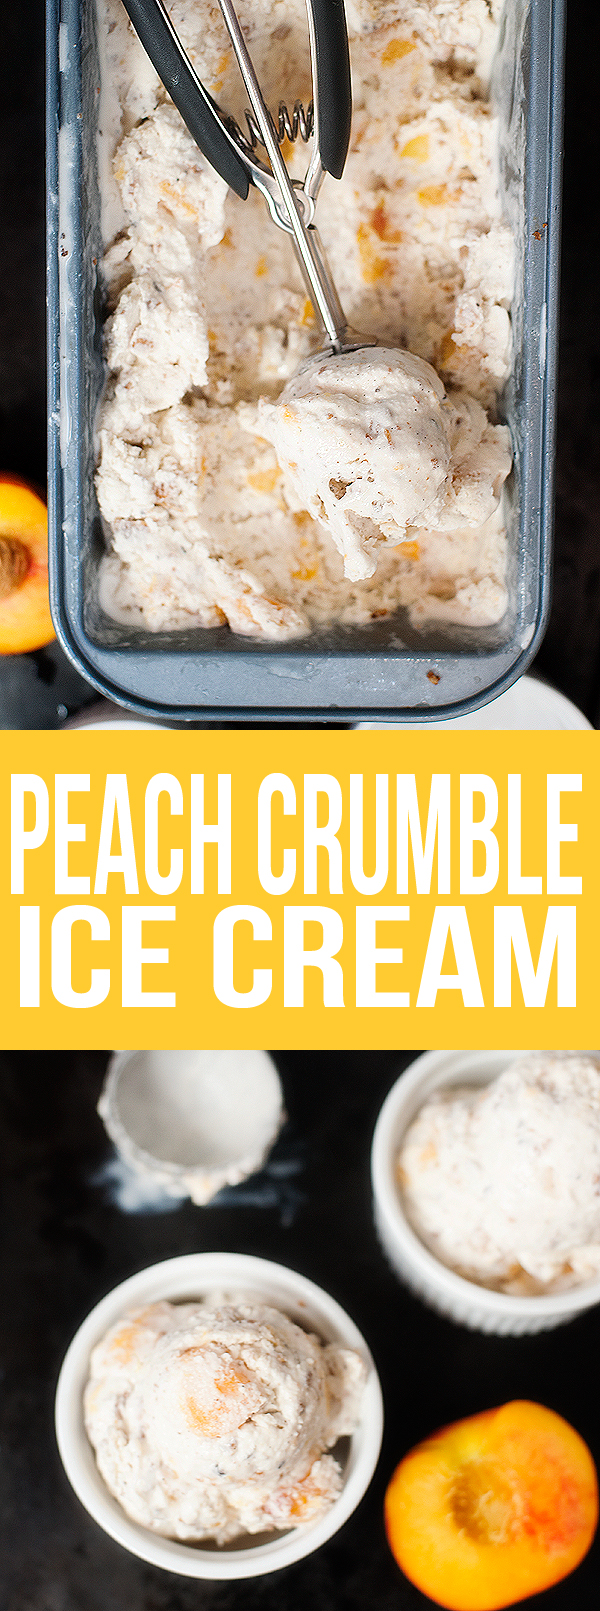 Peach Crumble Ice Cream